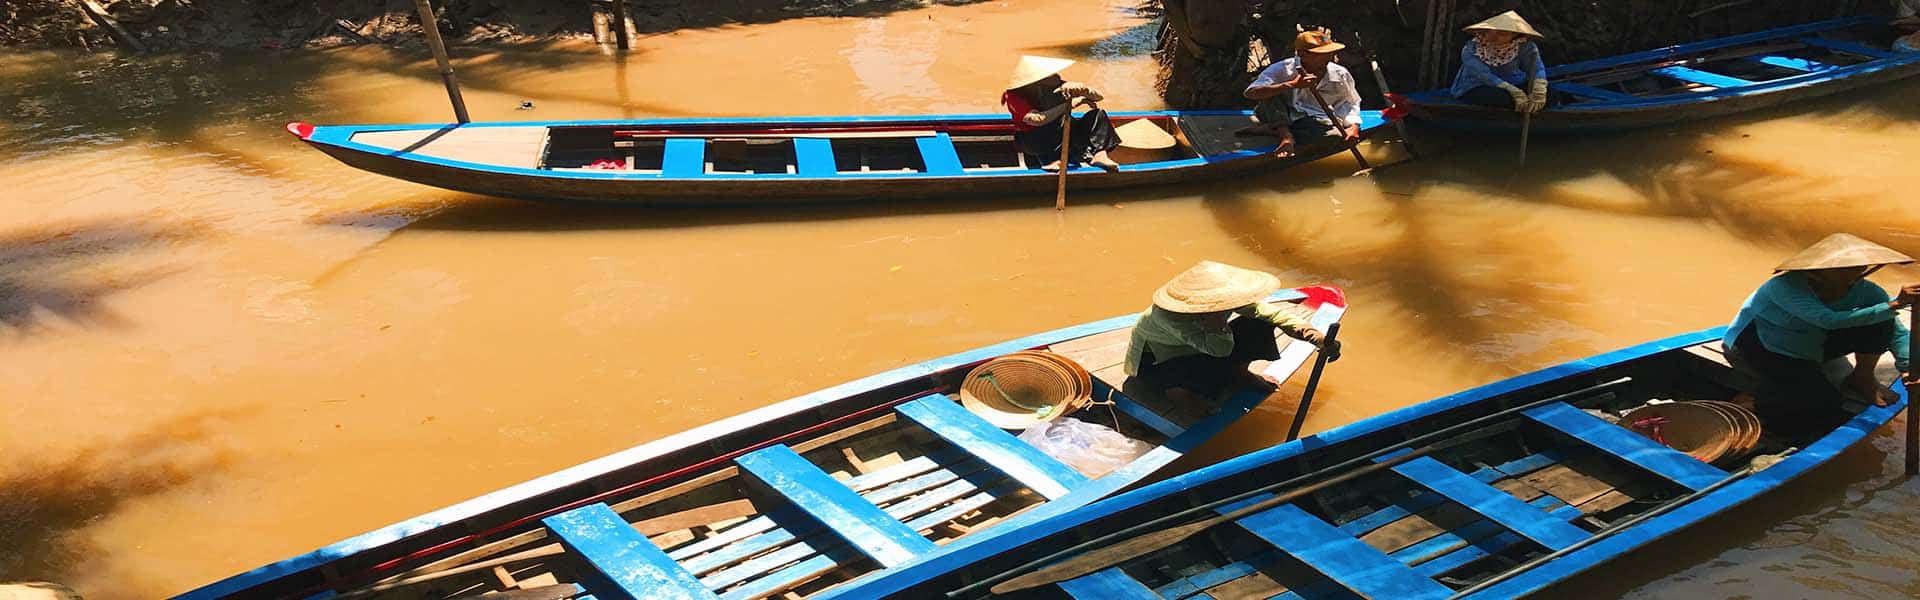 Deep in the Mekong Delta